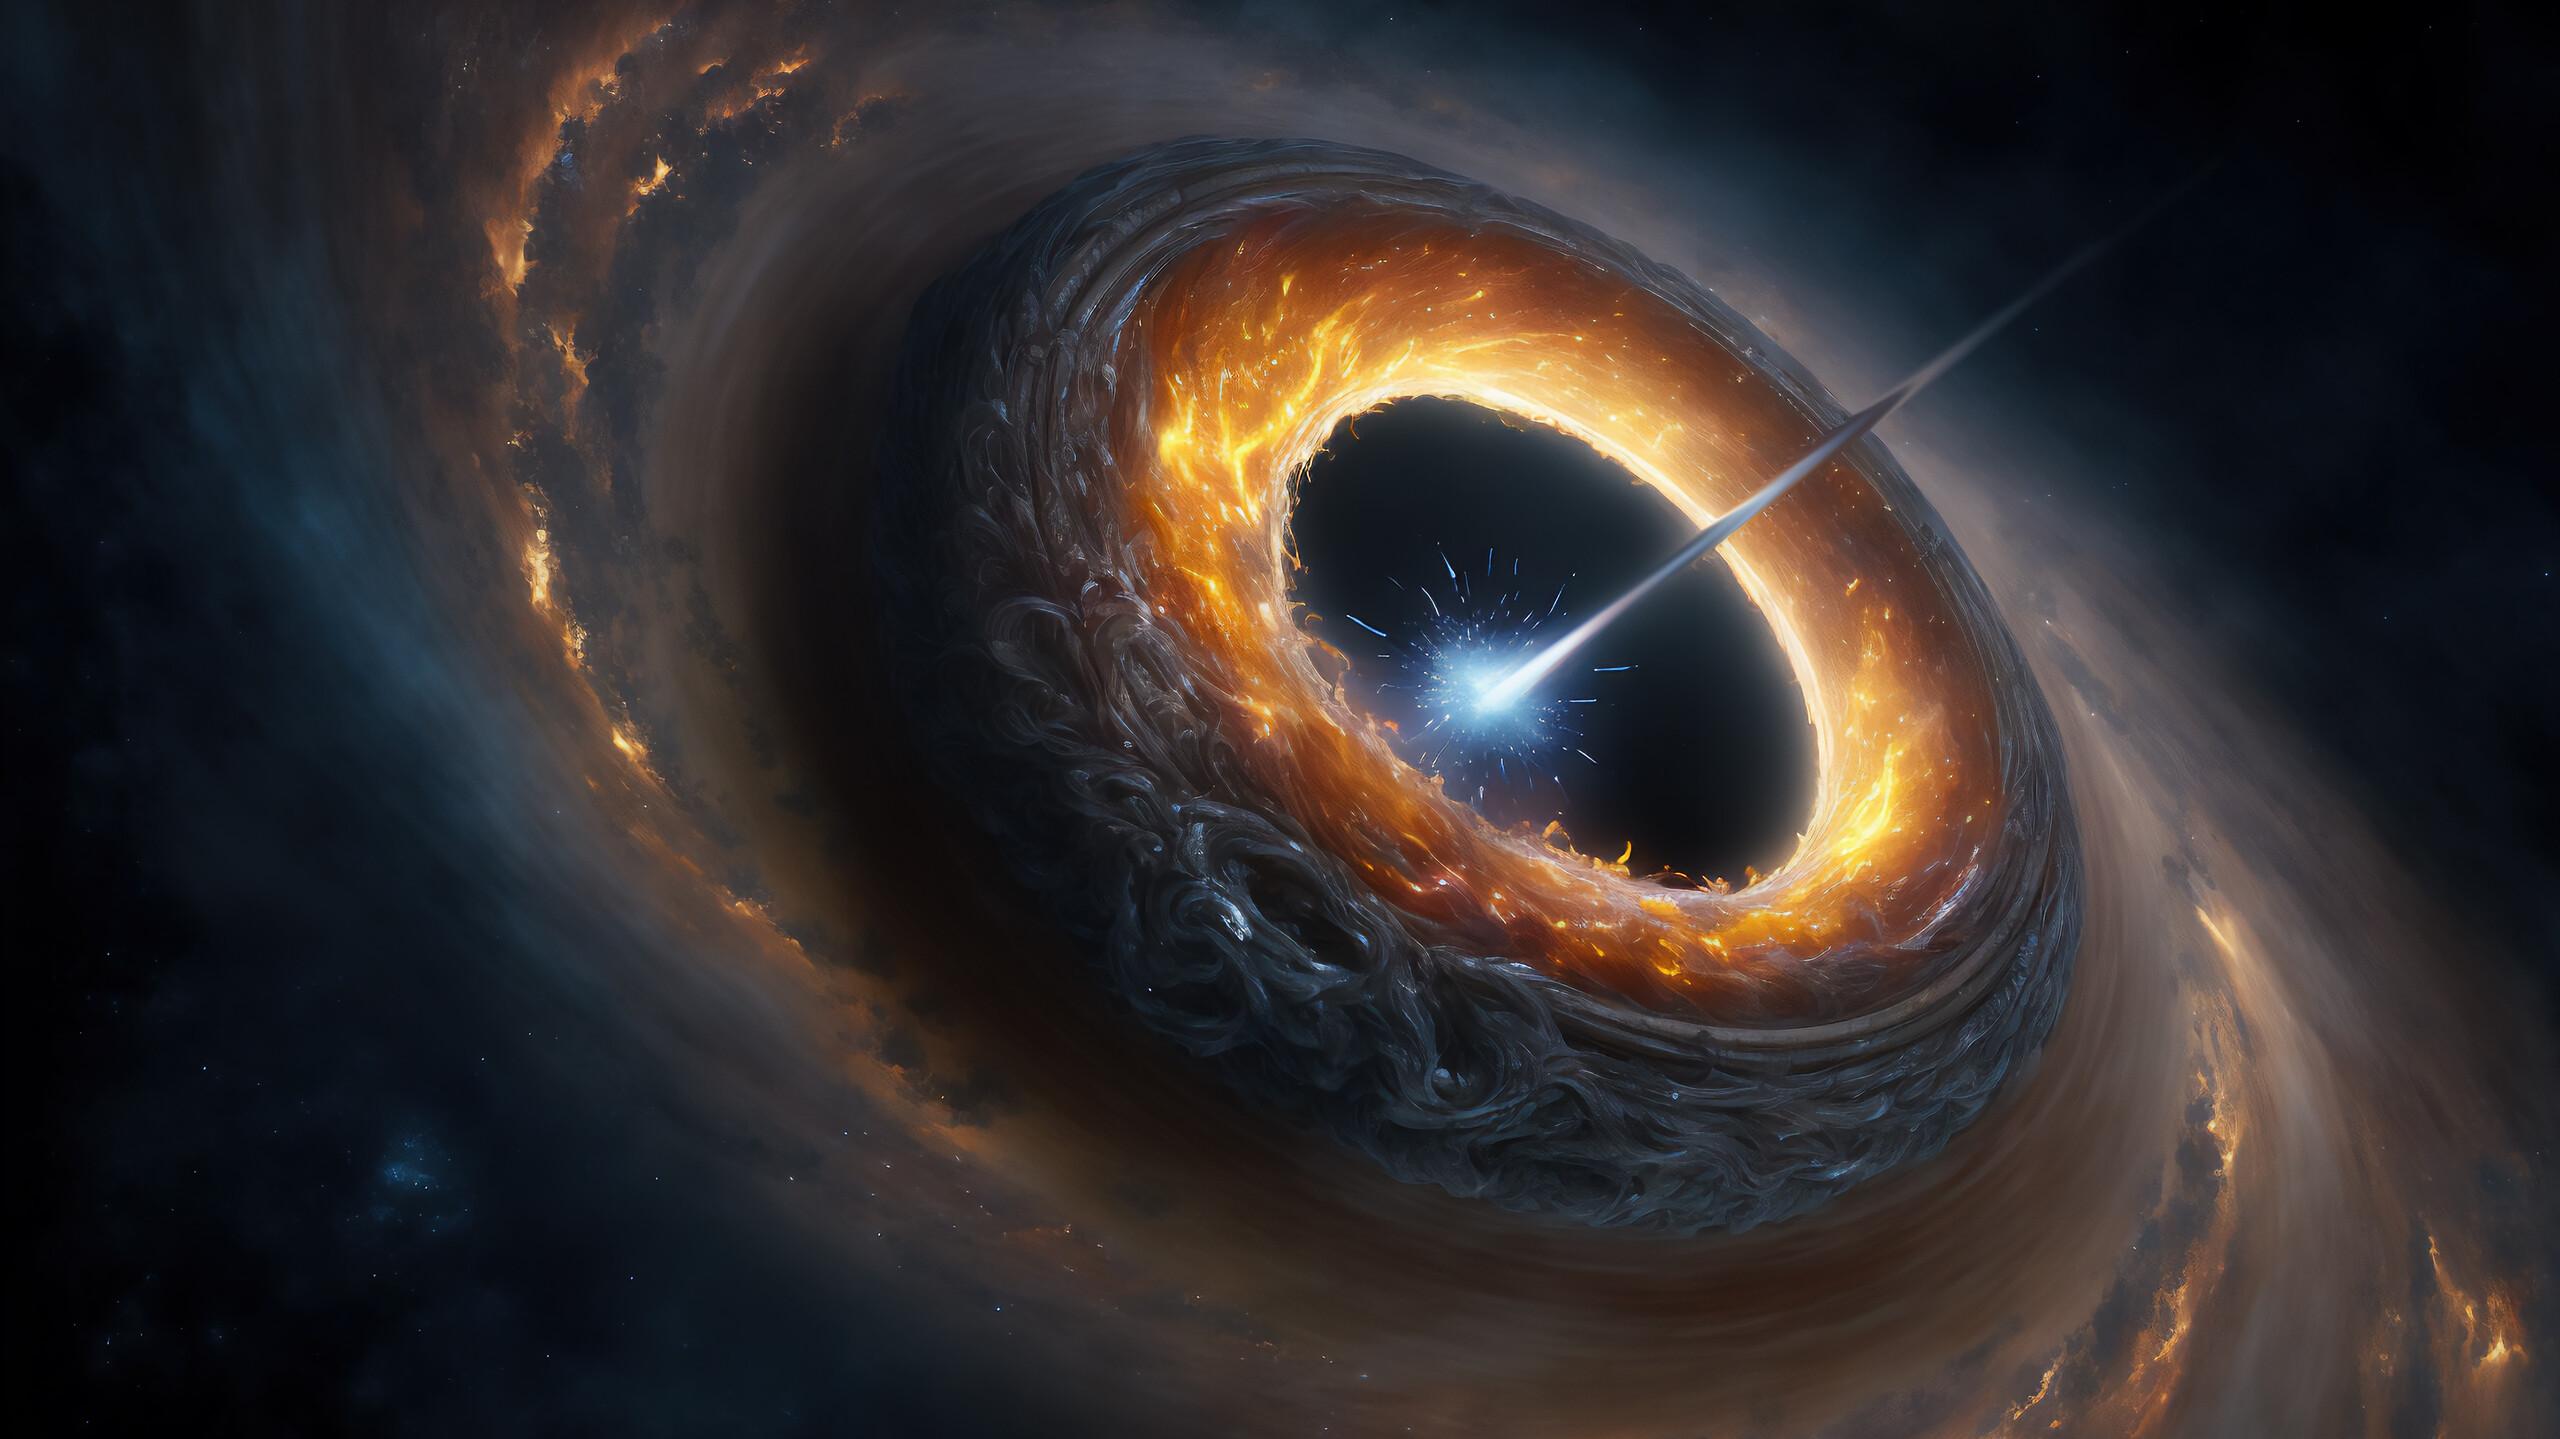 Black Hole Space Digital Art Wallpaper 4k HD Pc 1020i